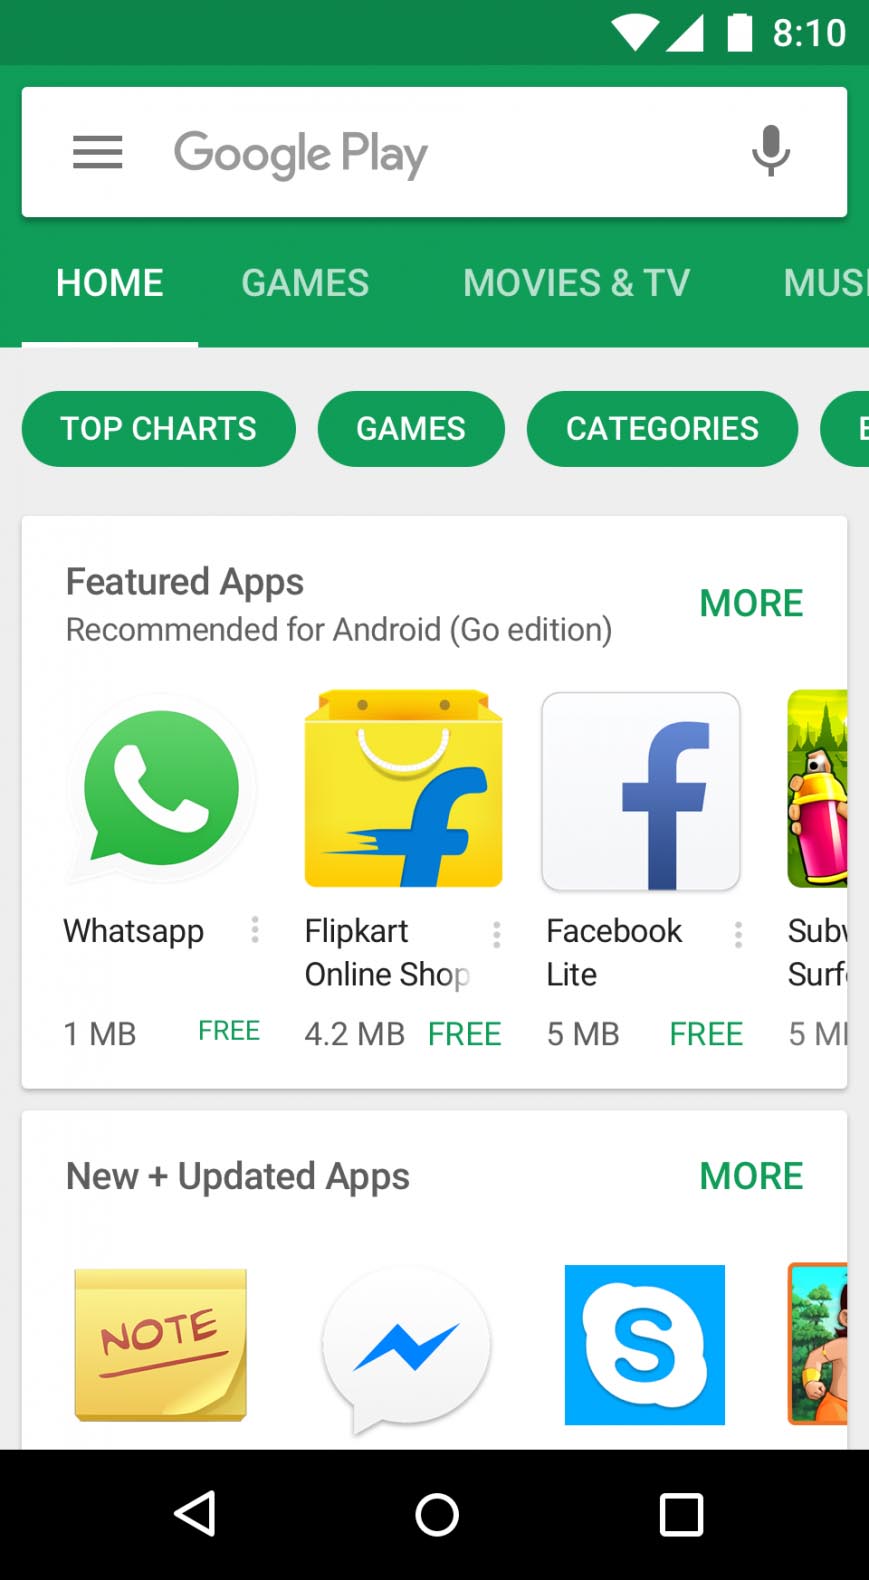 Android Oreo (Go edition)